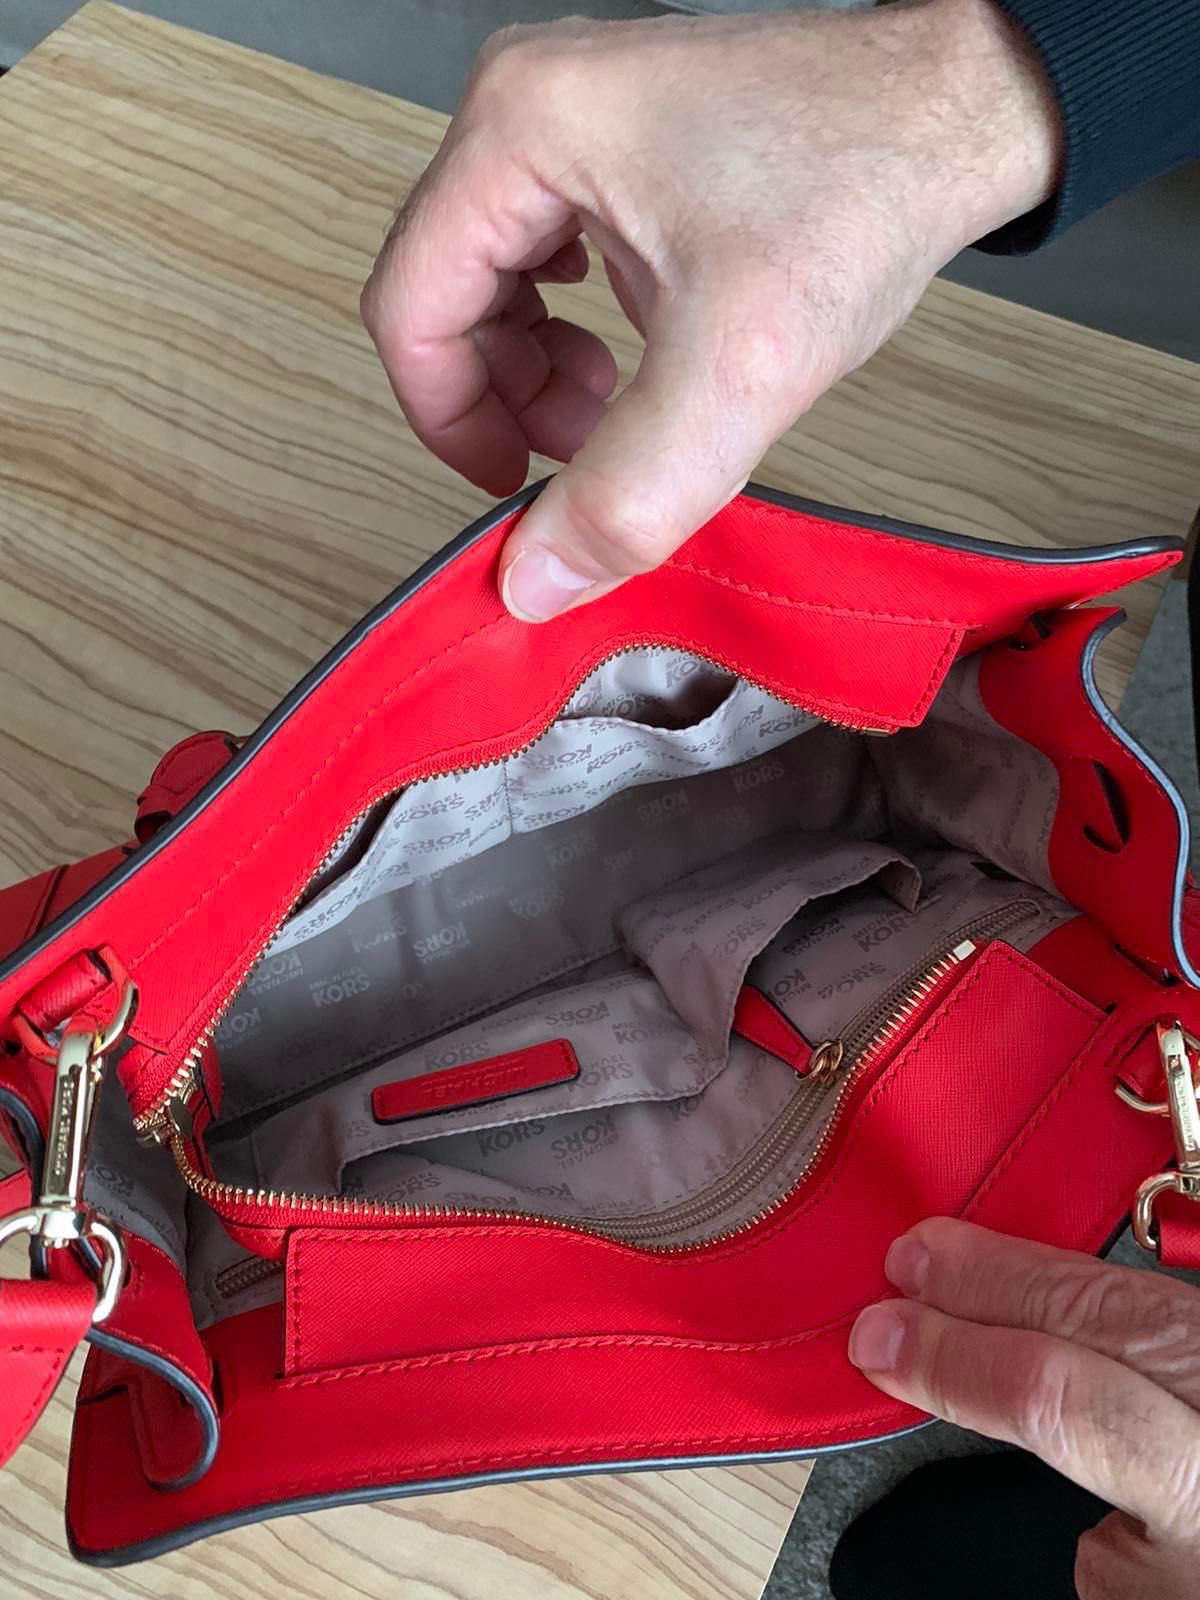 Чанта Michael Kors